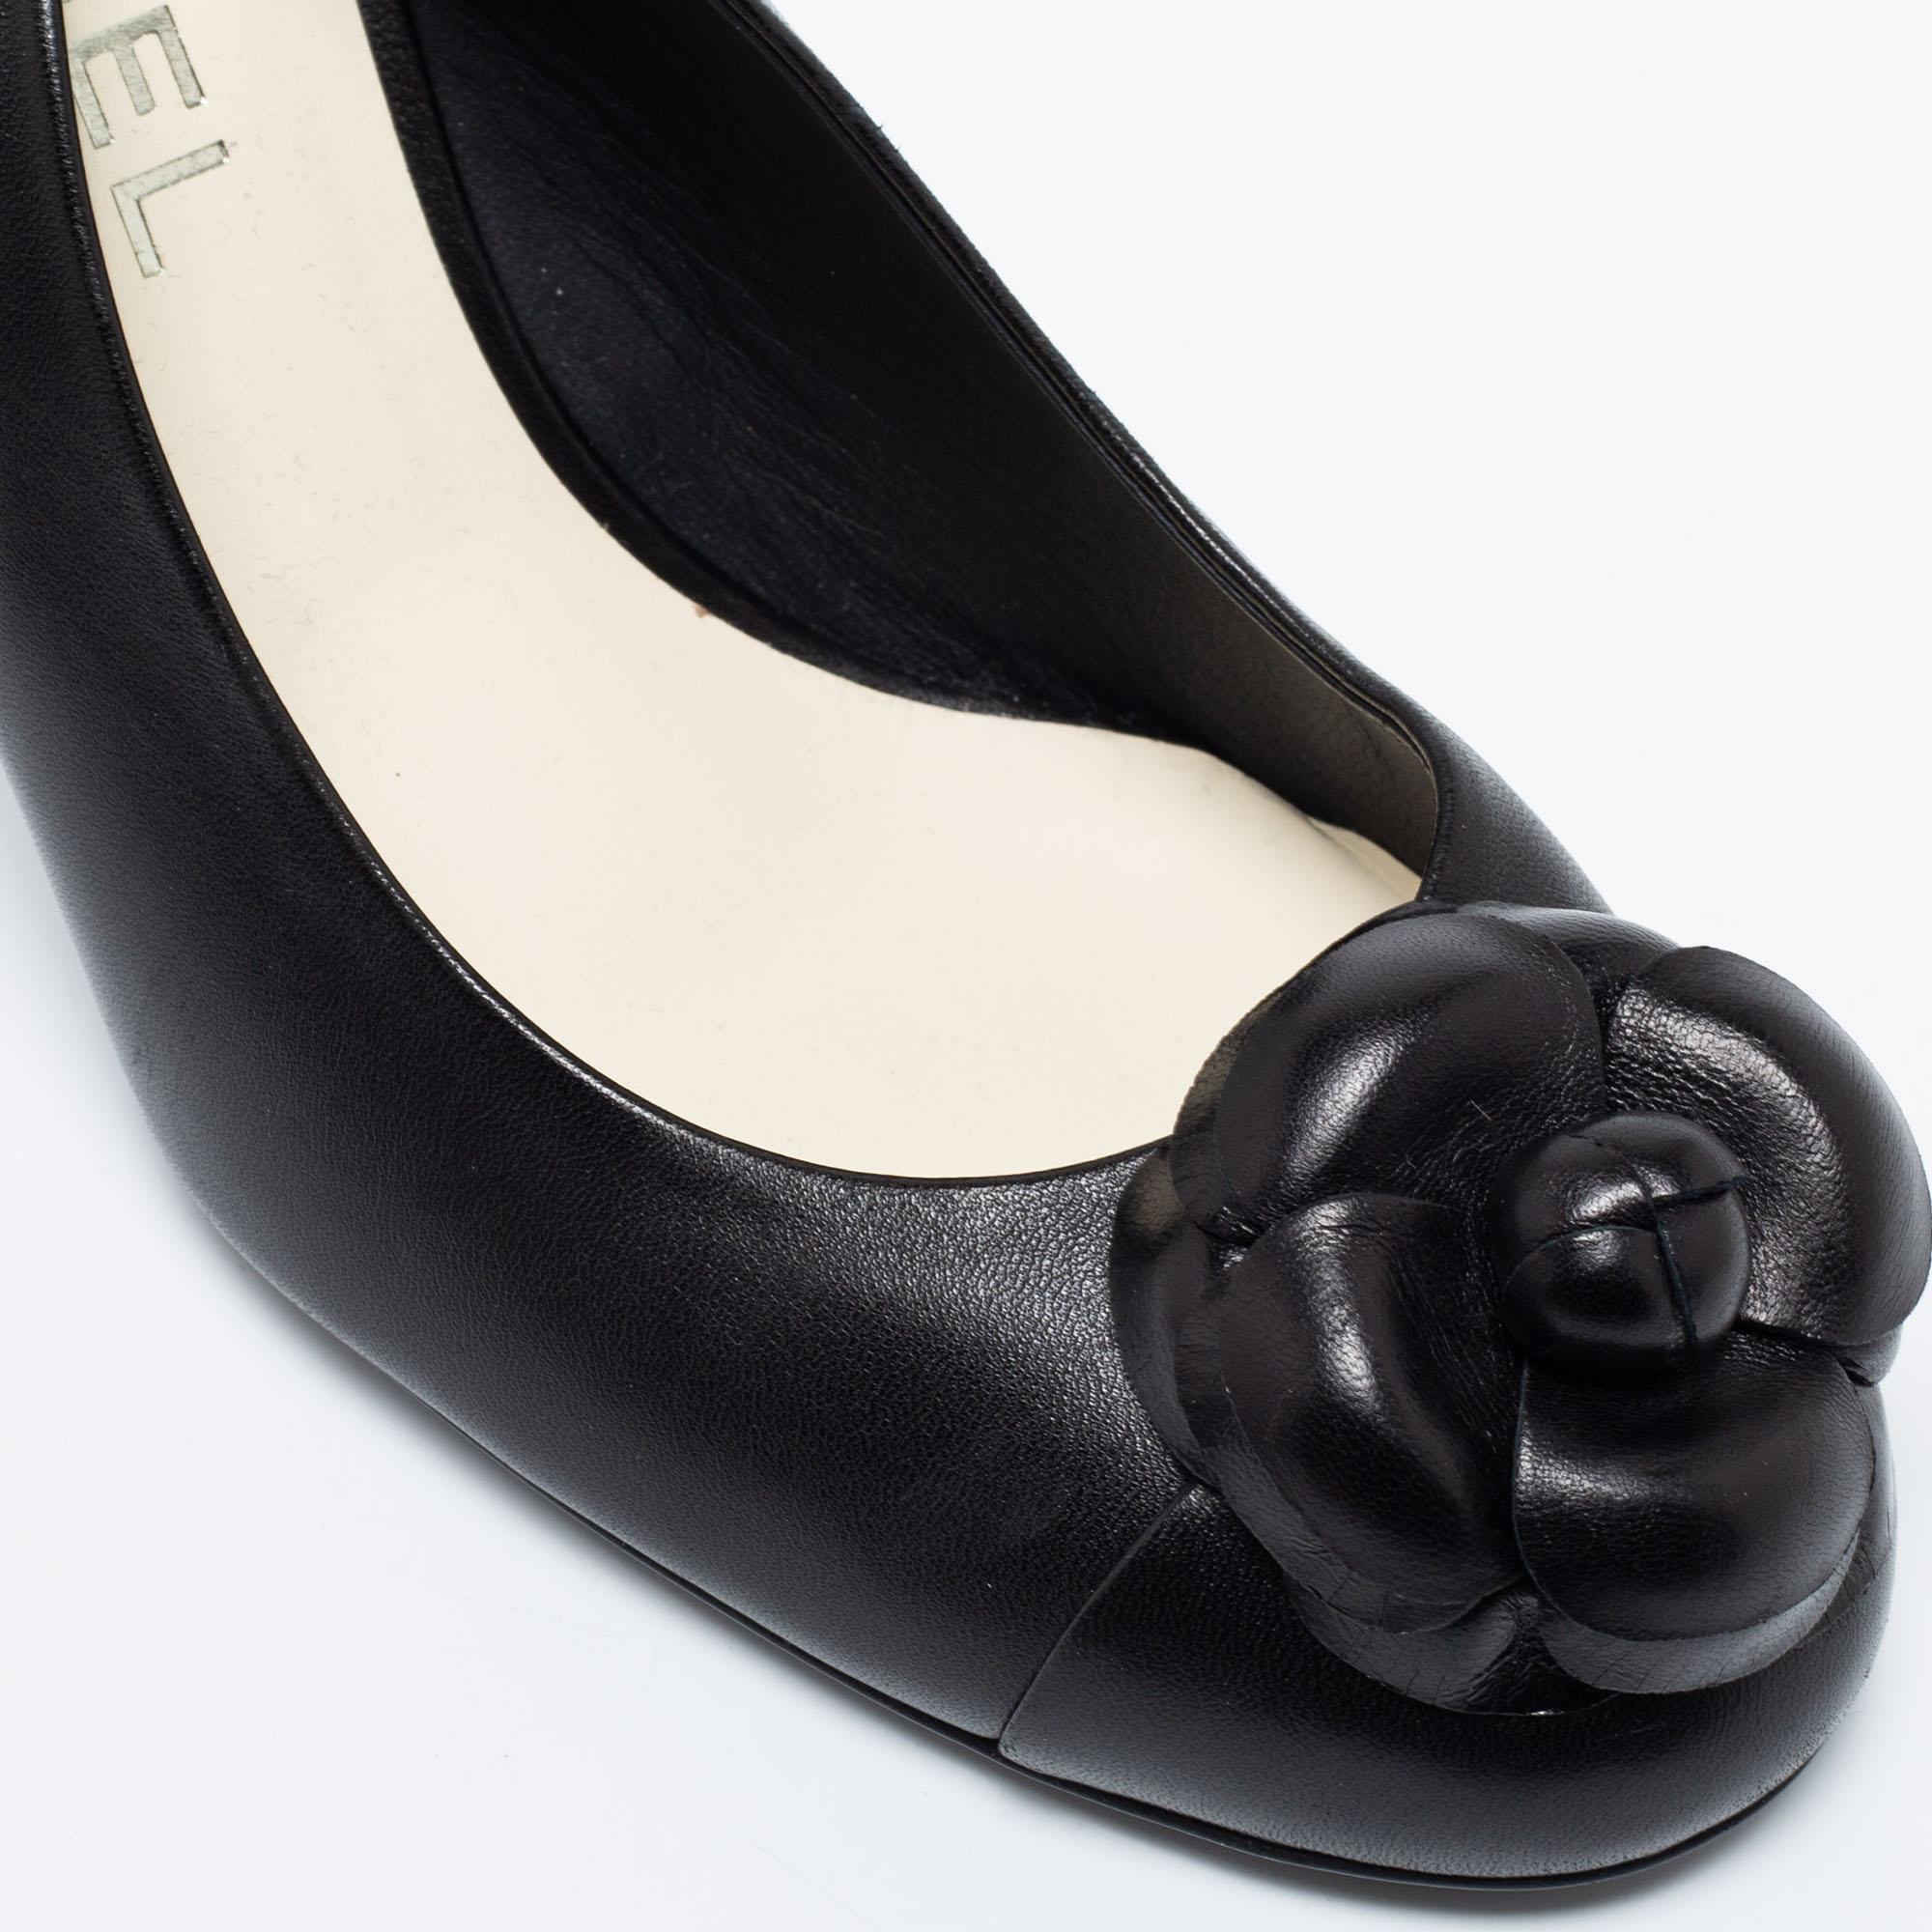 Chanel Black Leather Camellia Slingback Sandals Size 38 2